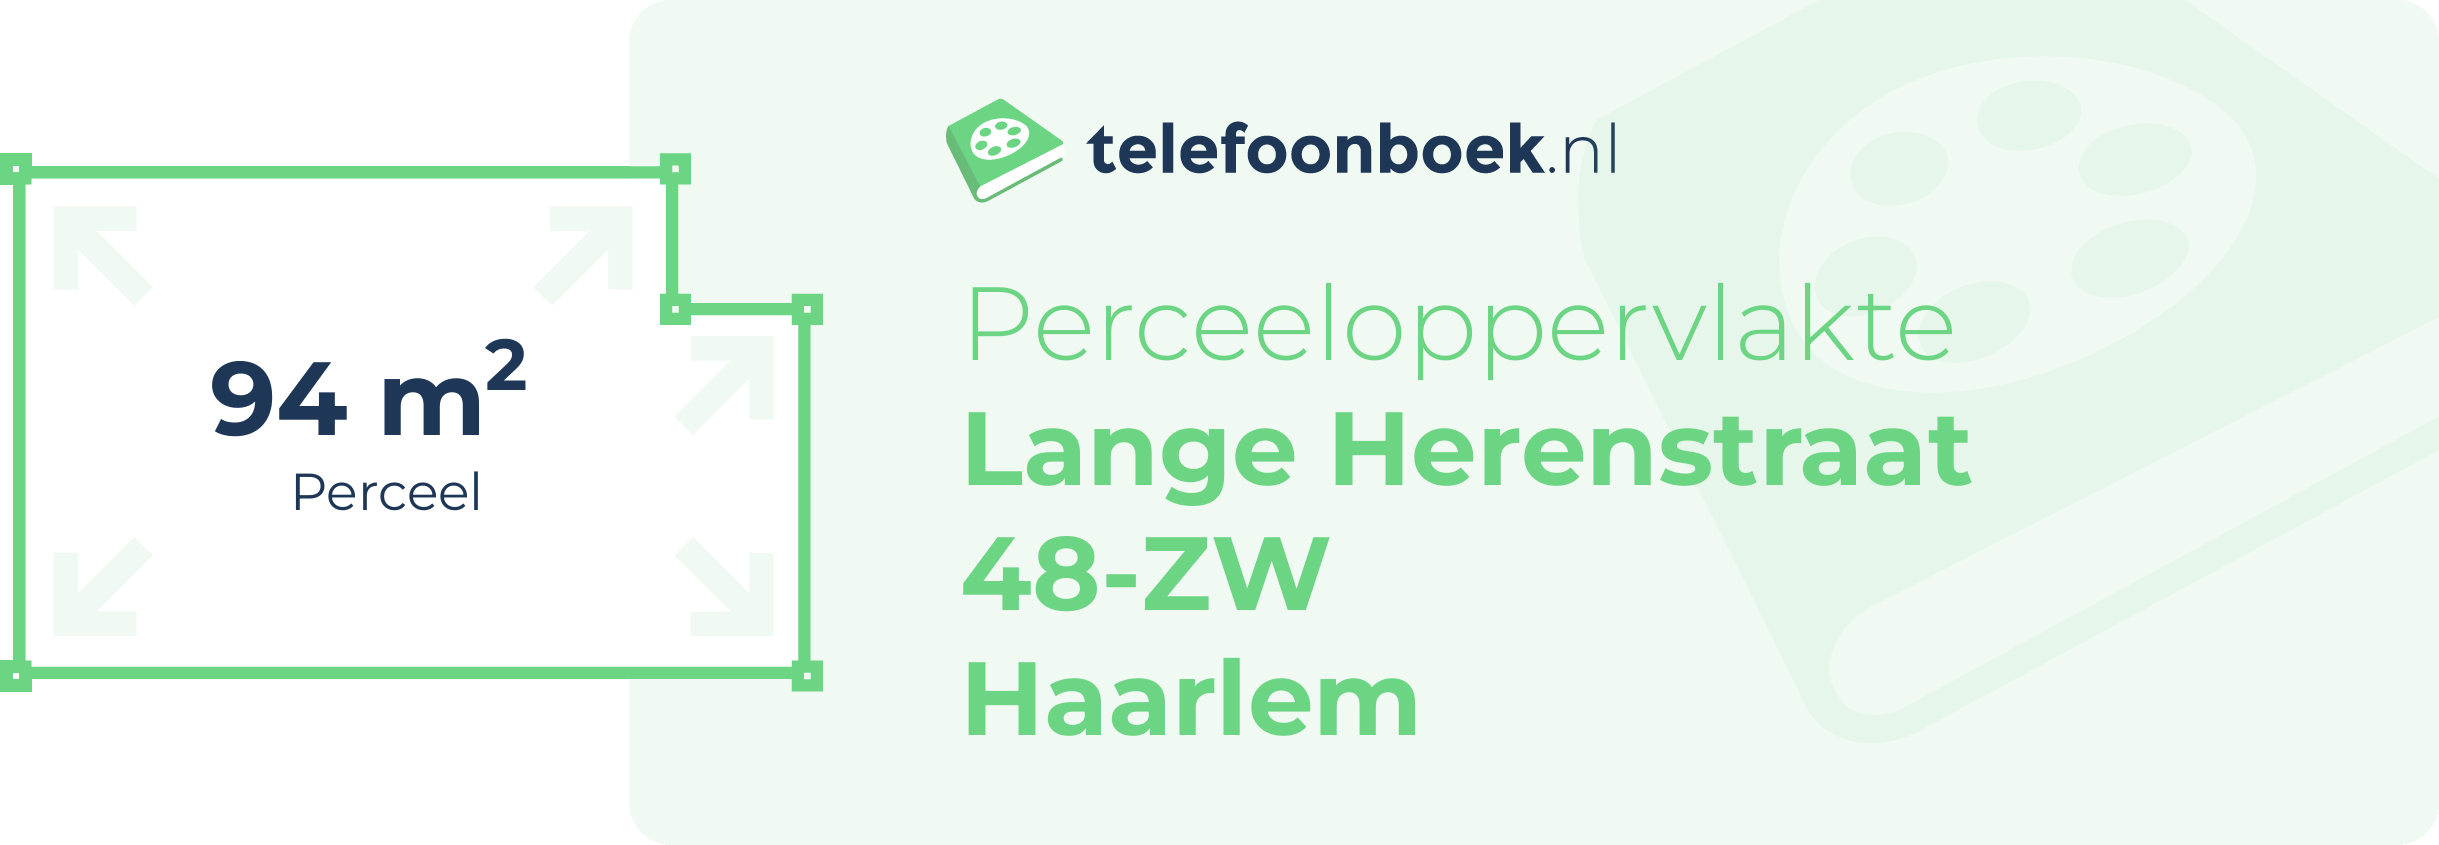 Perceeloppervlakte Lange Herenstraat 48-ZW Haarlem